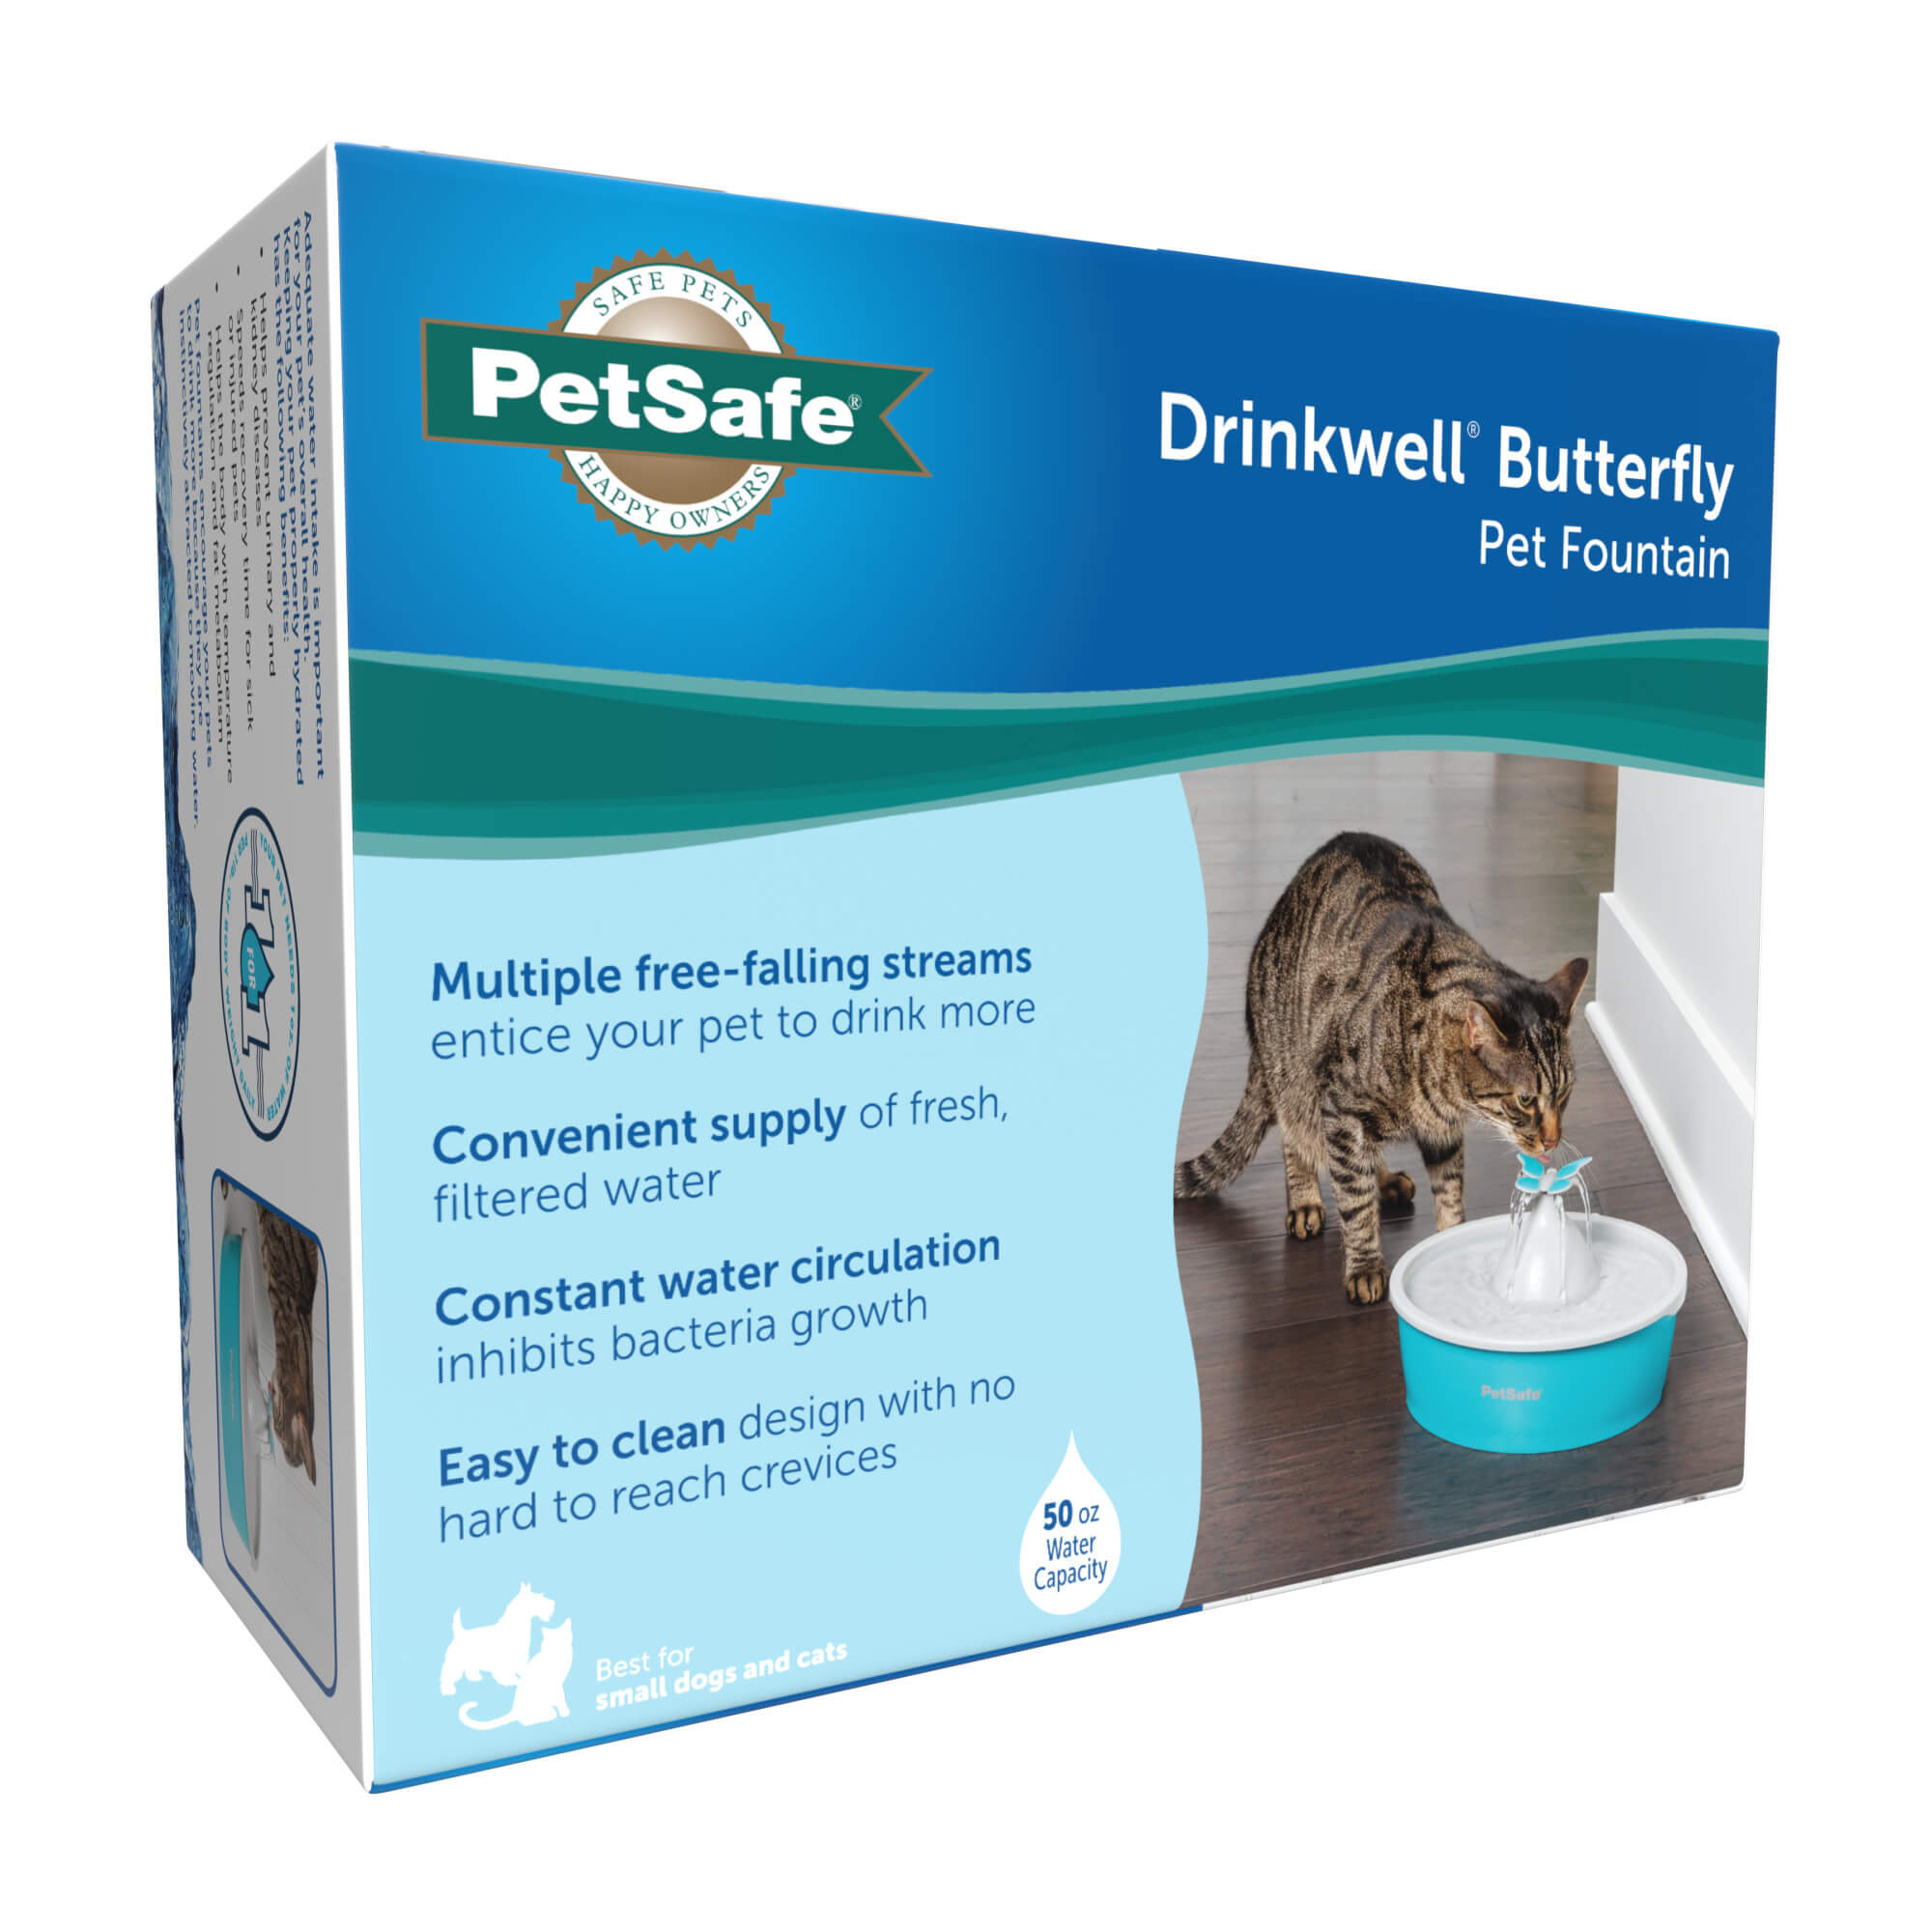 Petsafe drinkwell butterfly pet fountain - teal